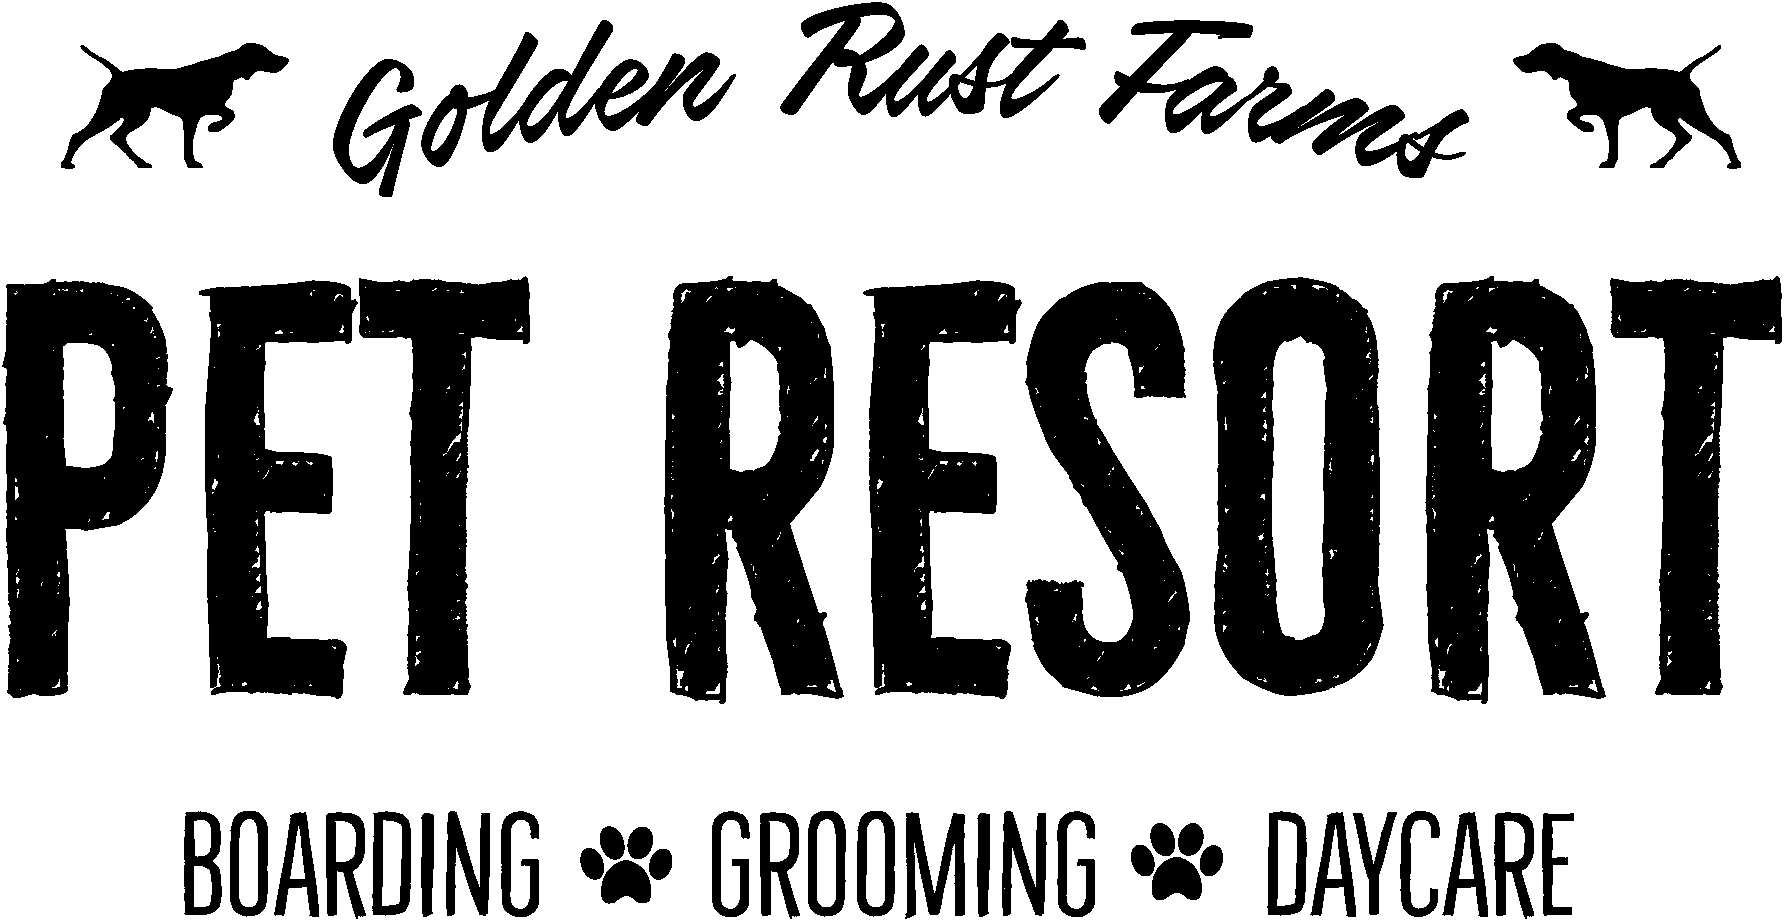 Golden Rust Farms Pet Resort